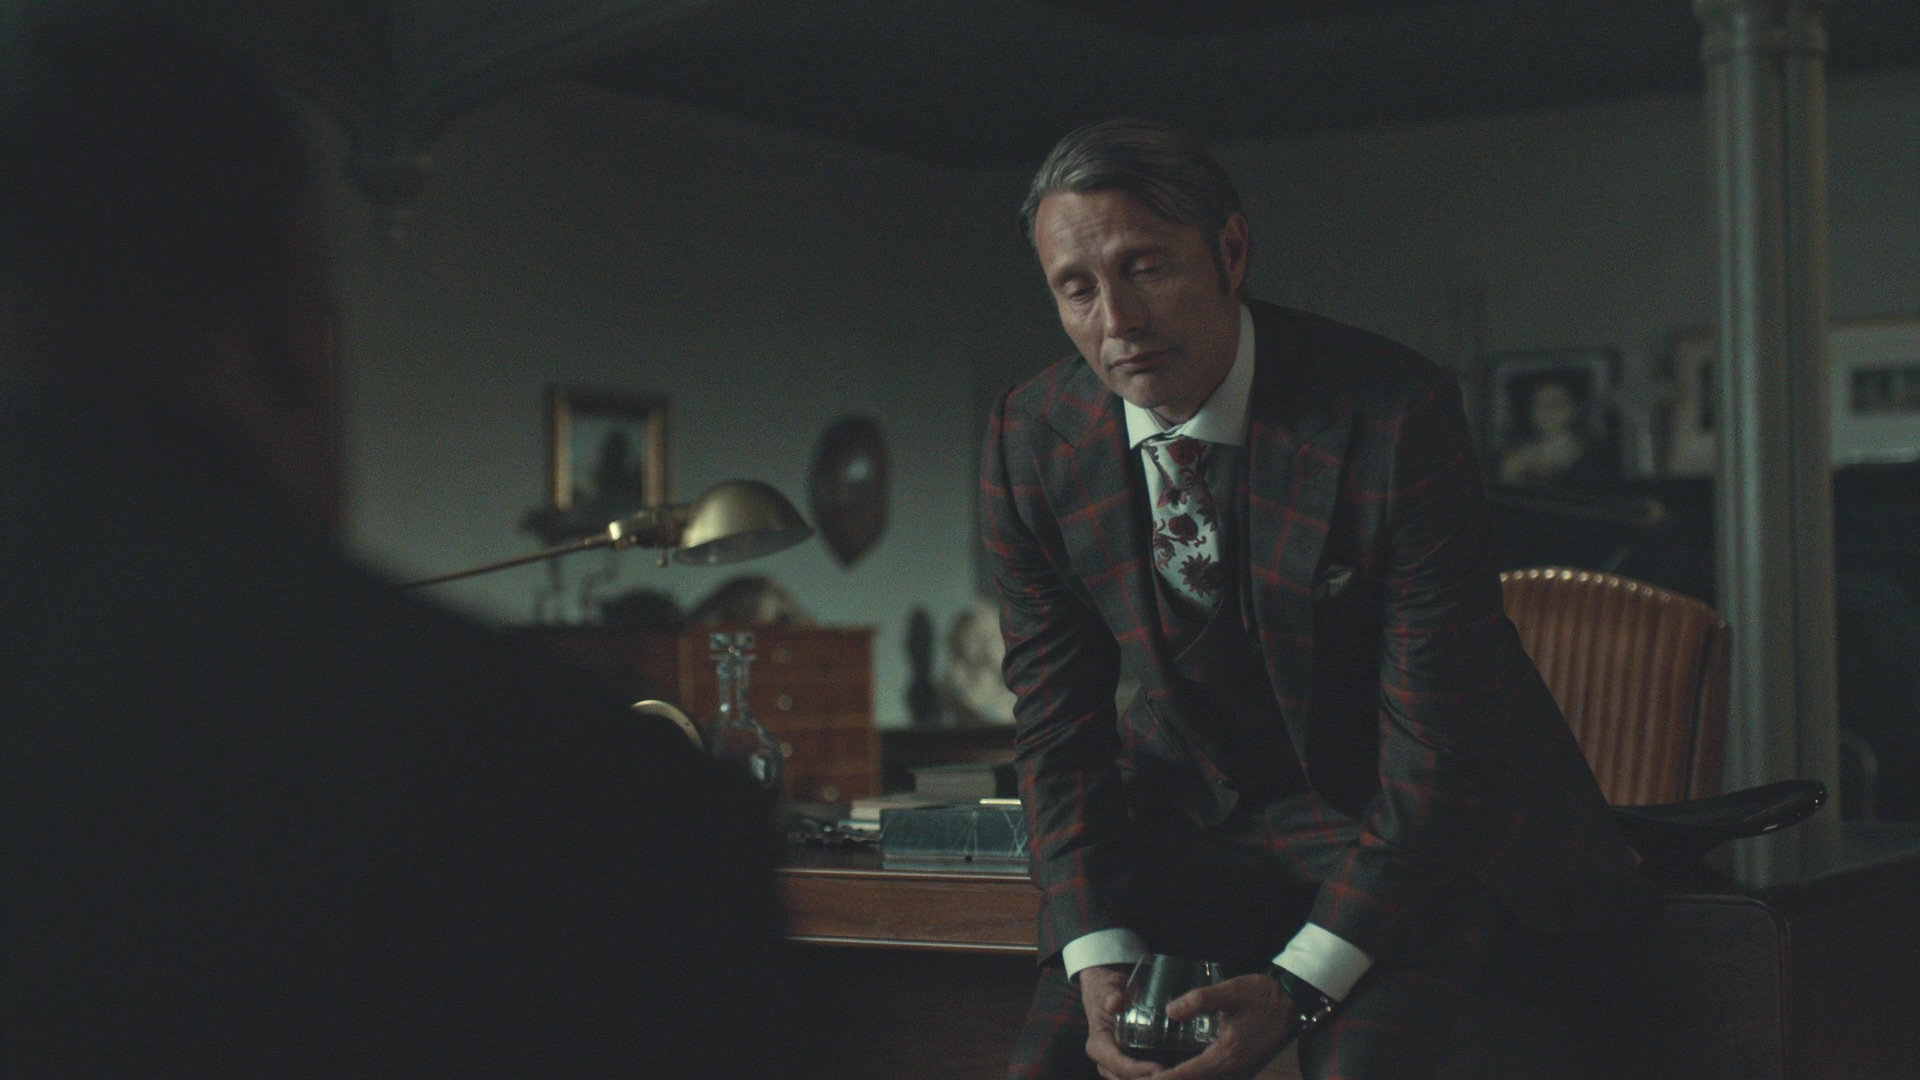 [汉尼拔].Hannibal.S02D01.2014.BluRay.1080p.AVC.DTS-HD.MA.5.1-dislike@HDSky   46.12G-6.jpg